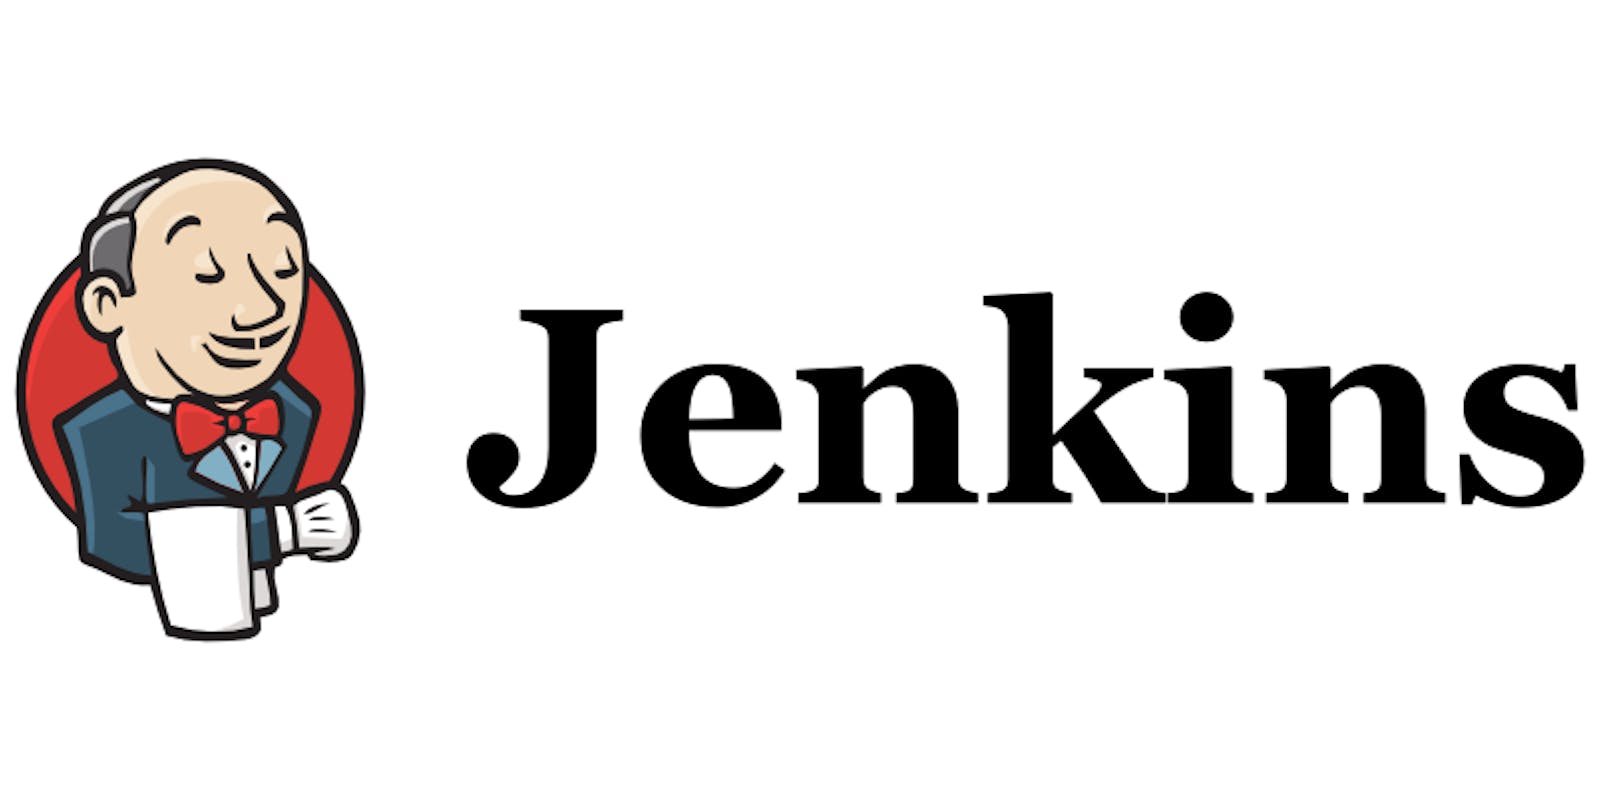 Why LinkedIn use Jenkins?